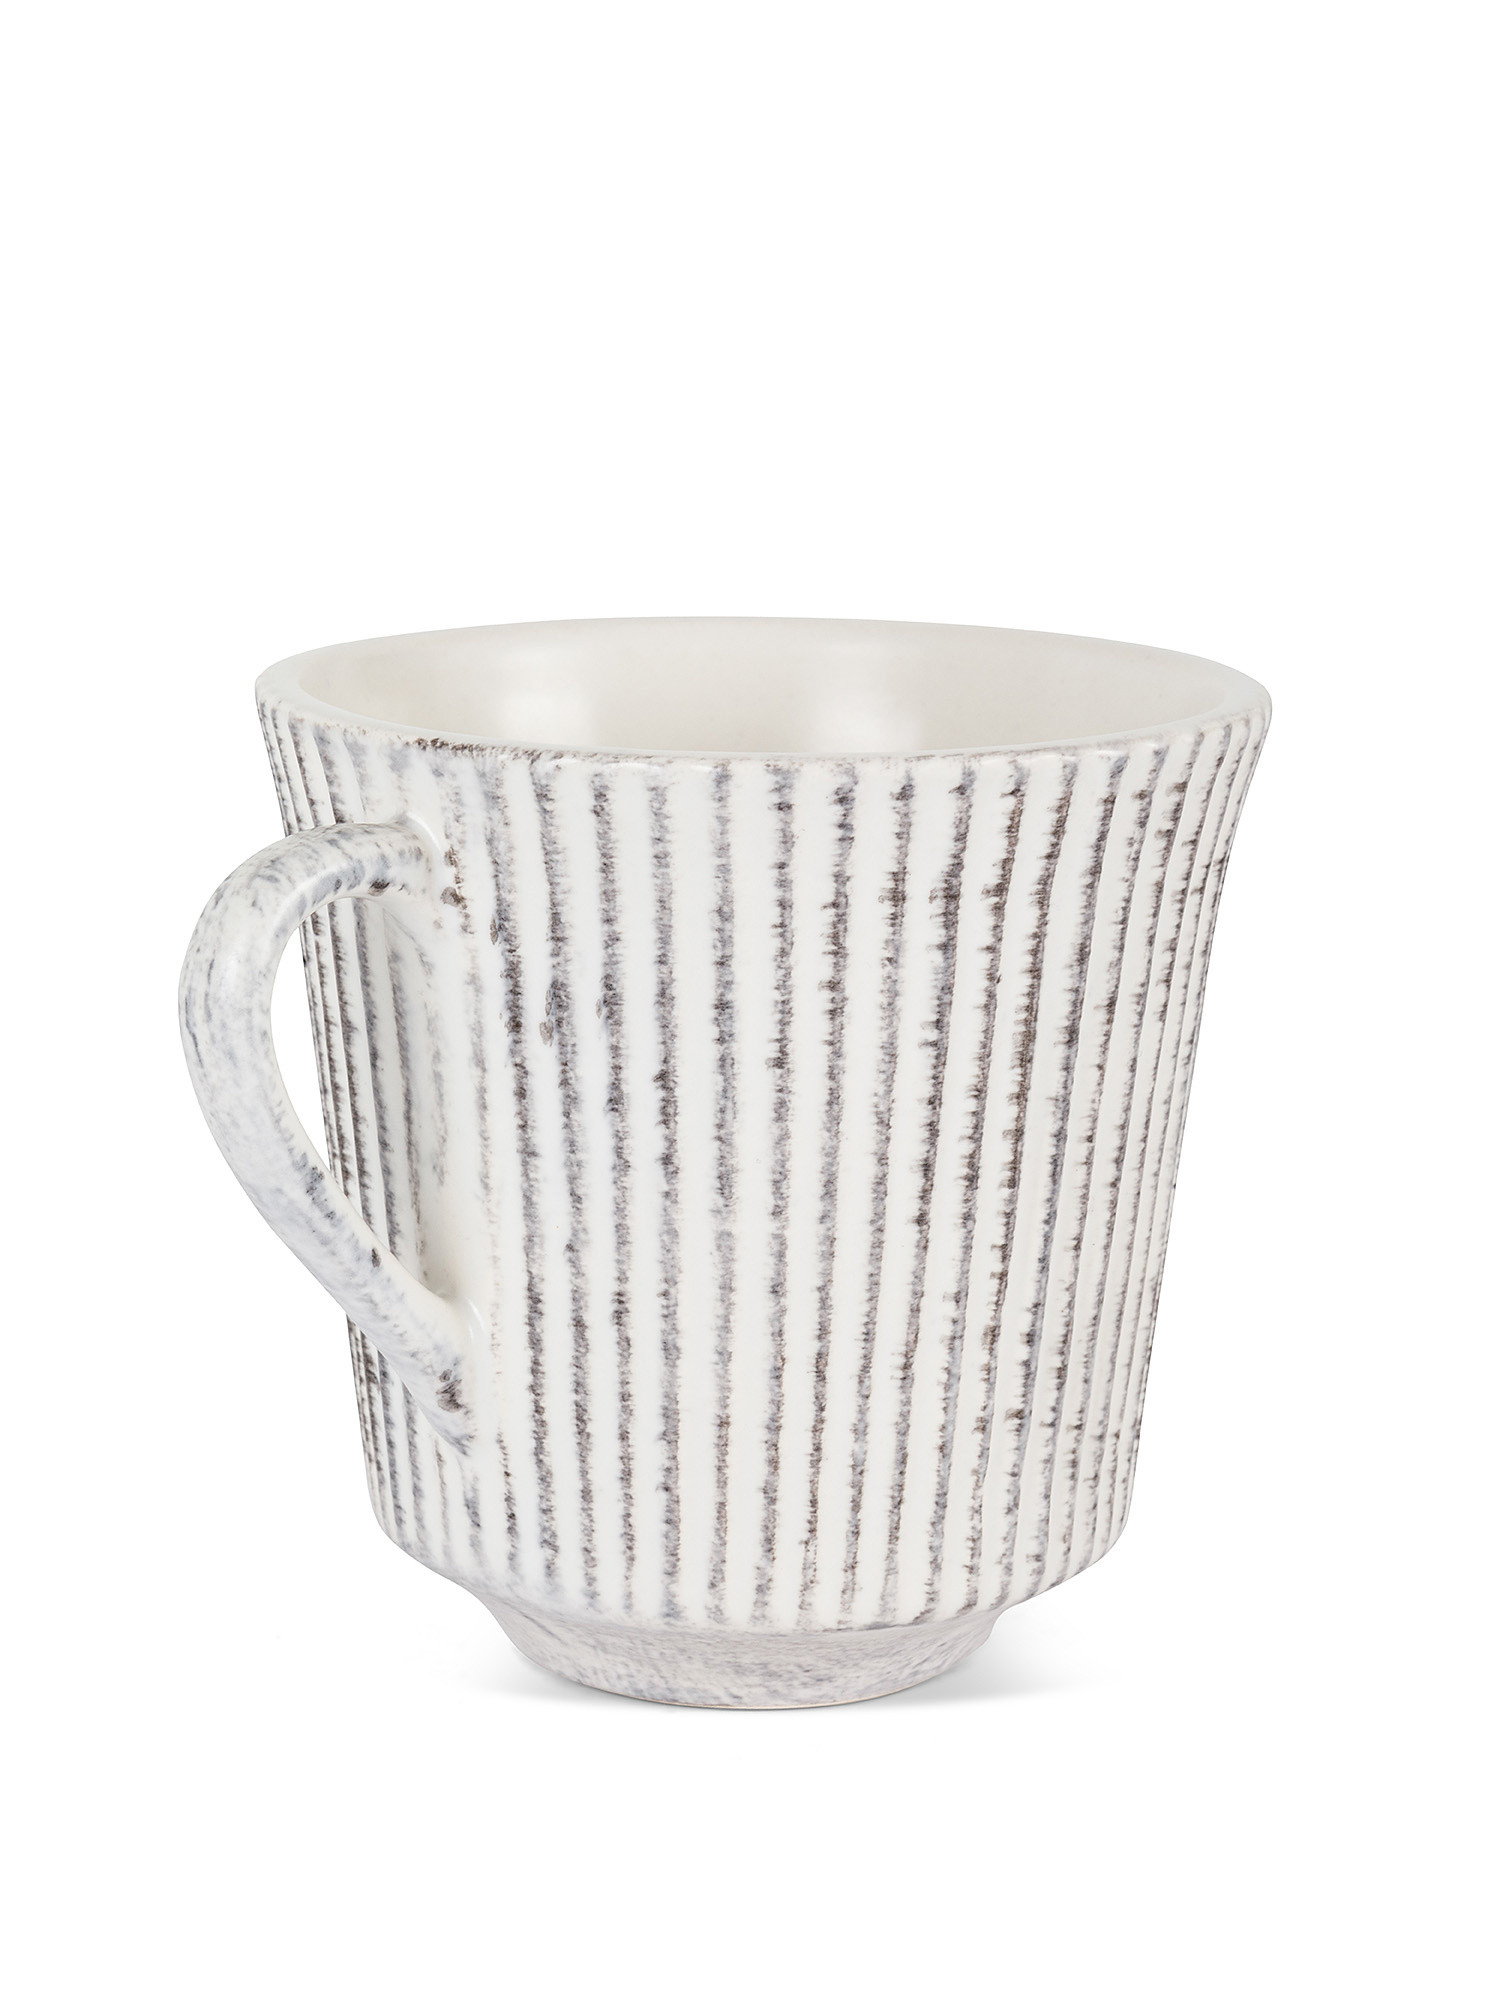 Mug ceramica effetto rigato, Bianco, large